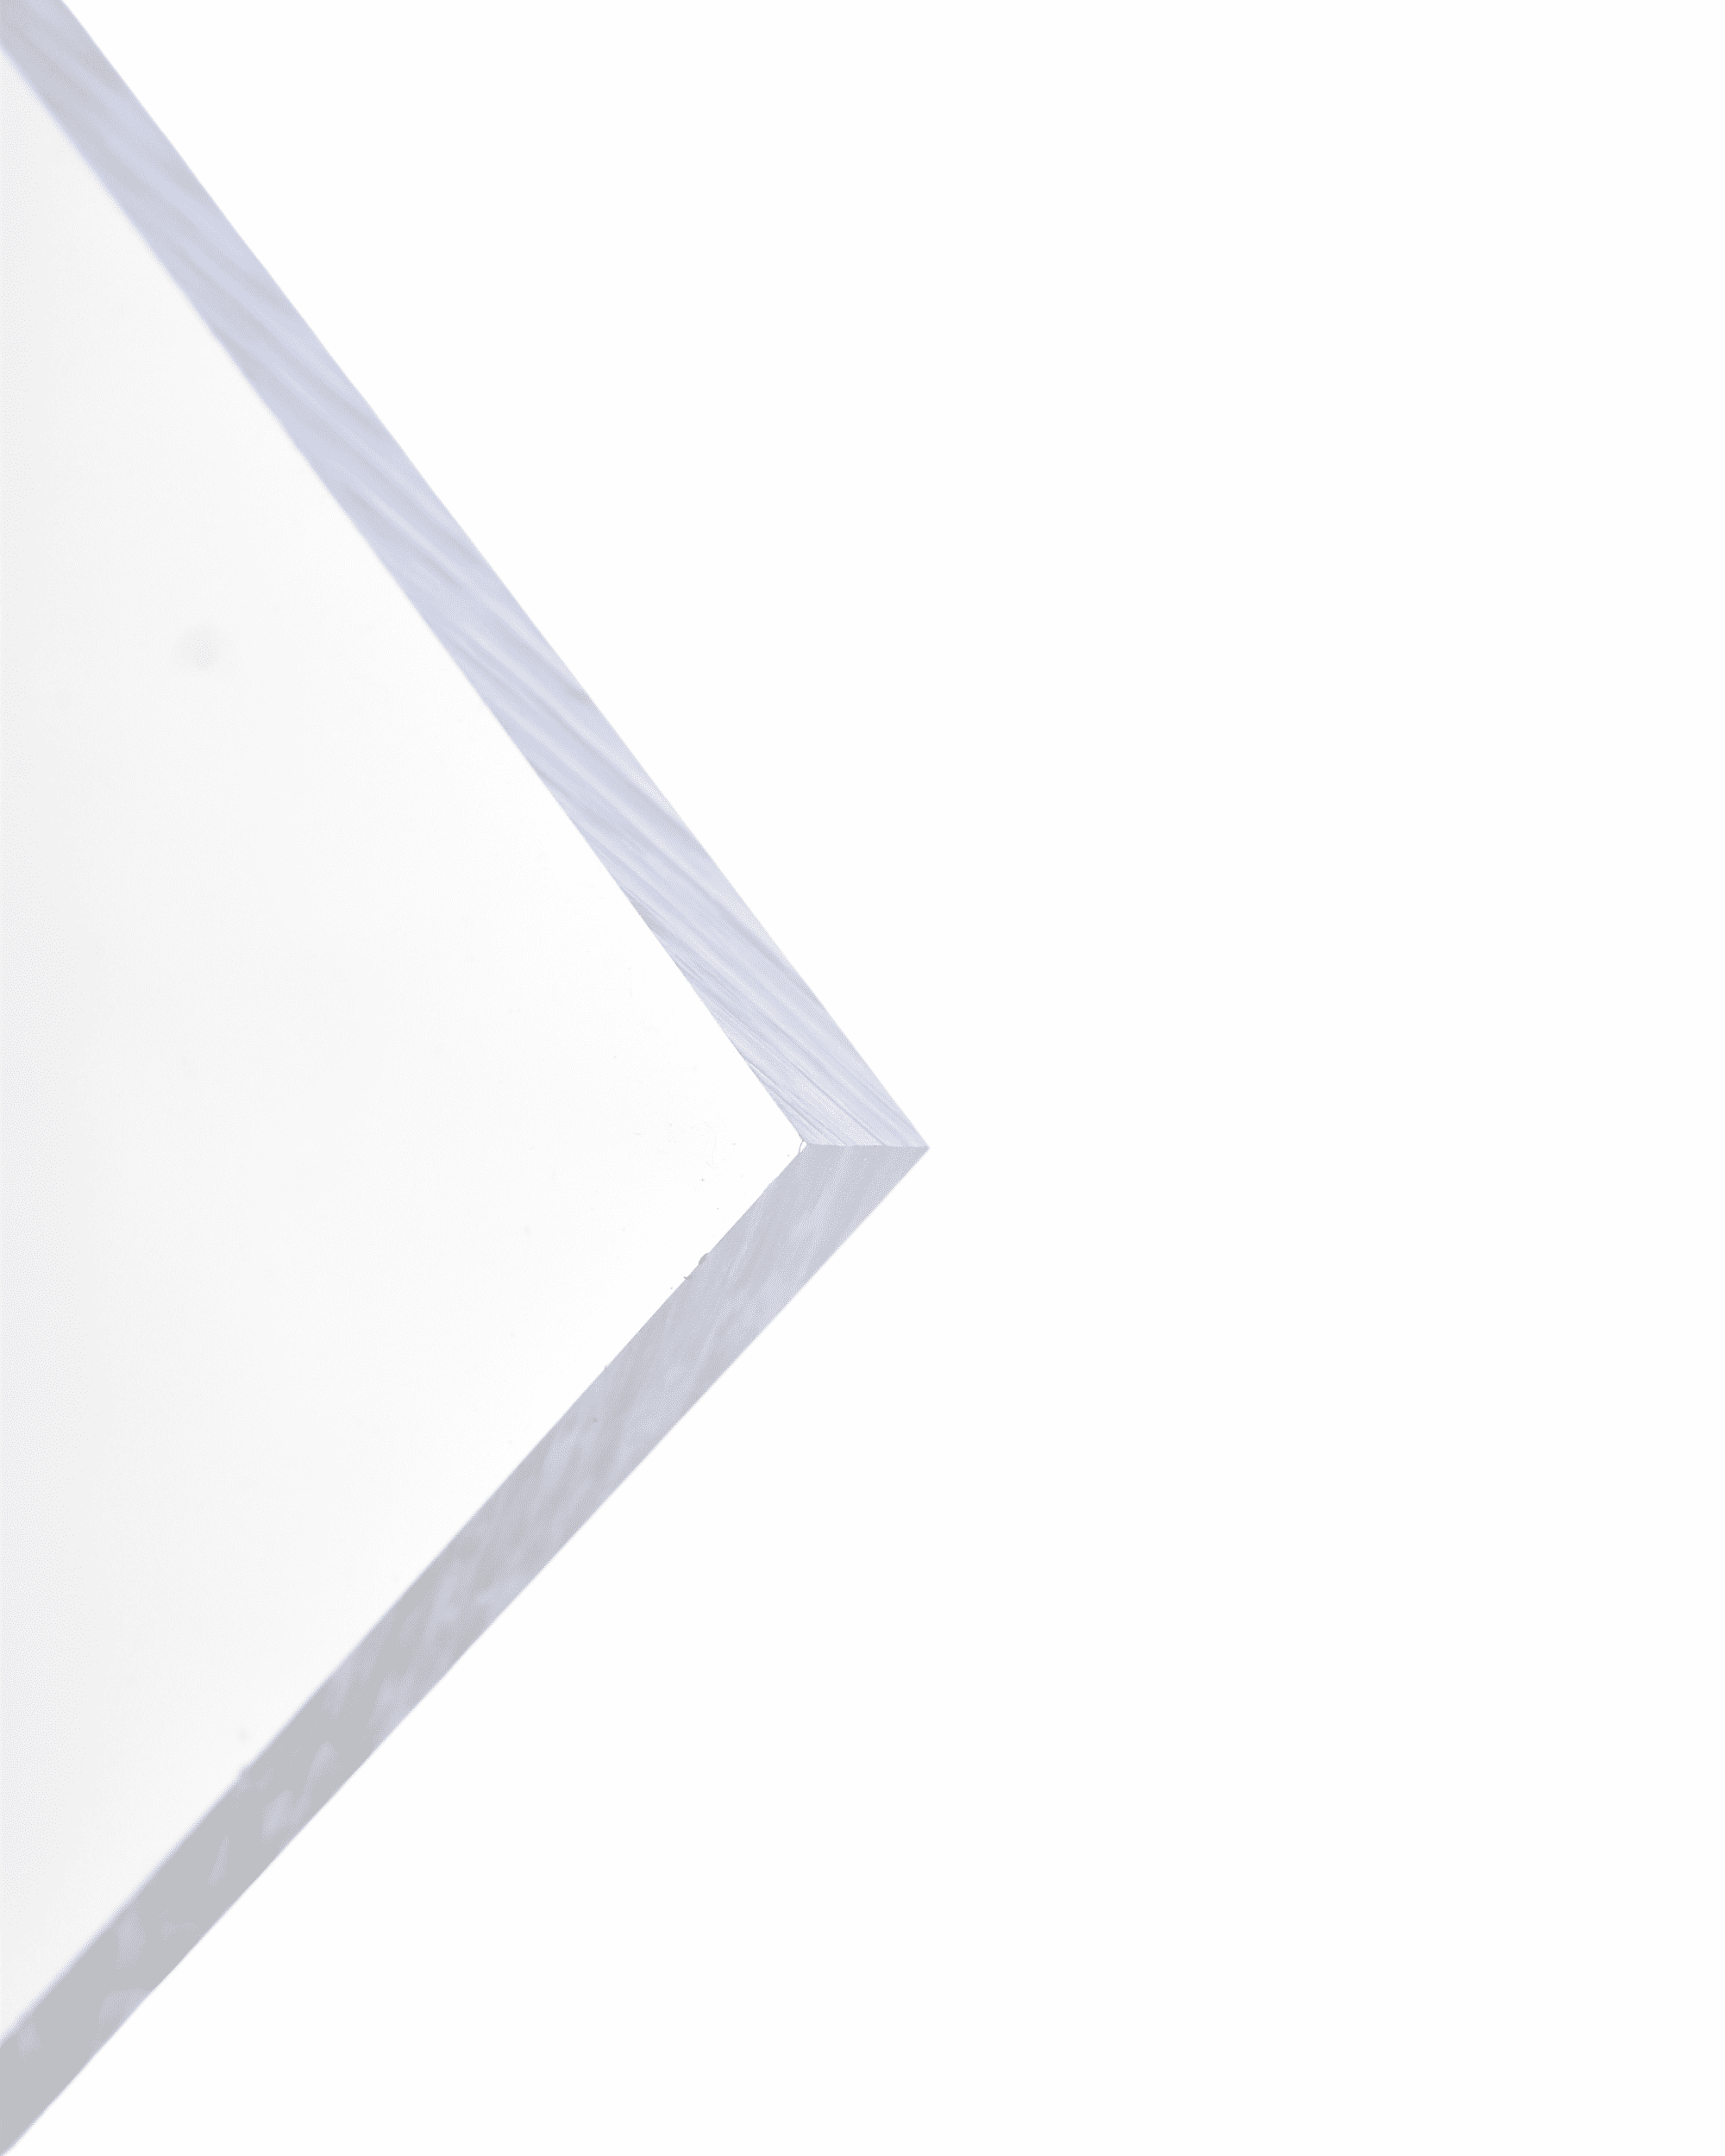 New Clear Acrylic Plexiglass Sheet 1/16" .060" Thick 20" X 24" 